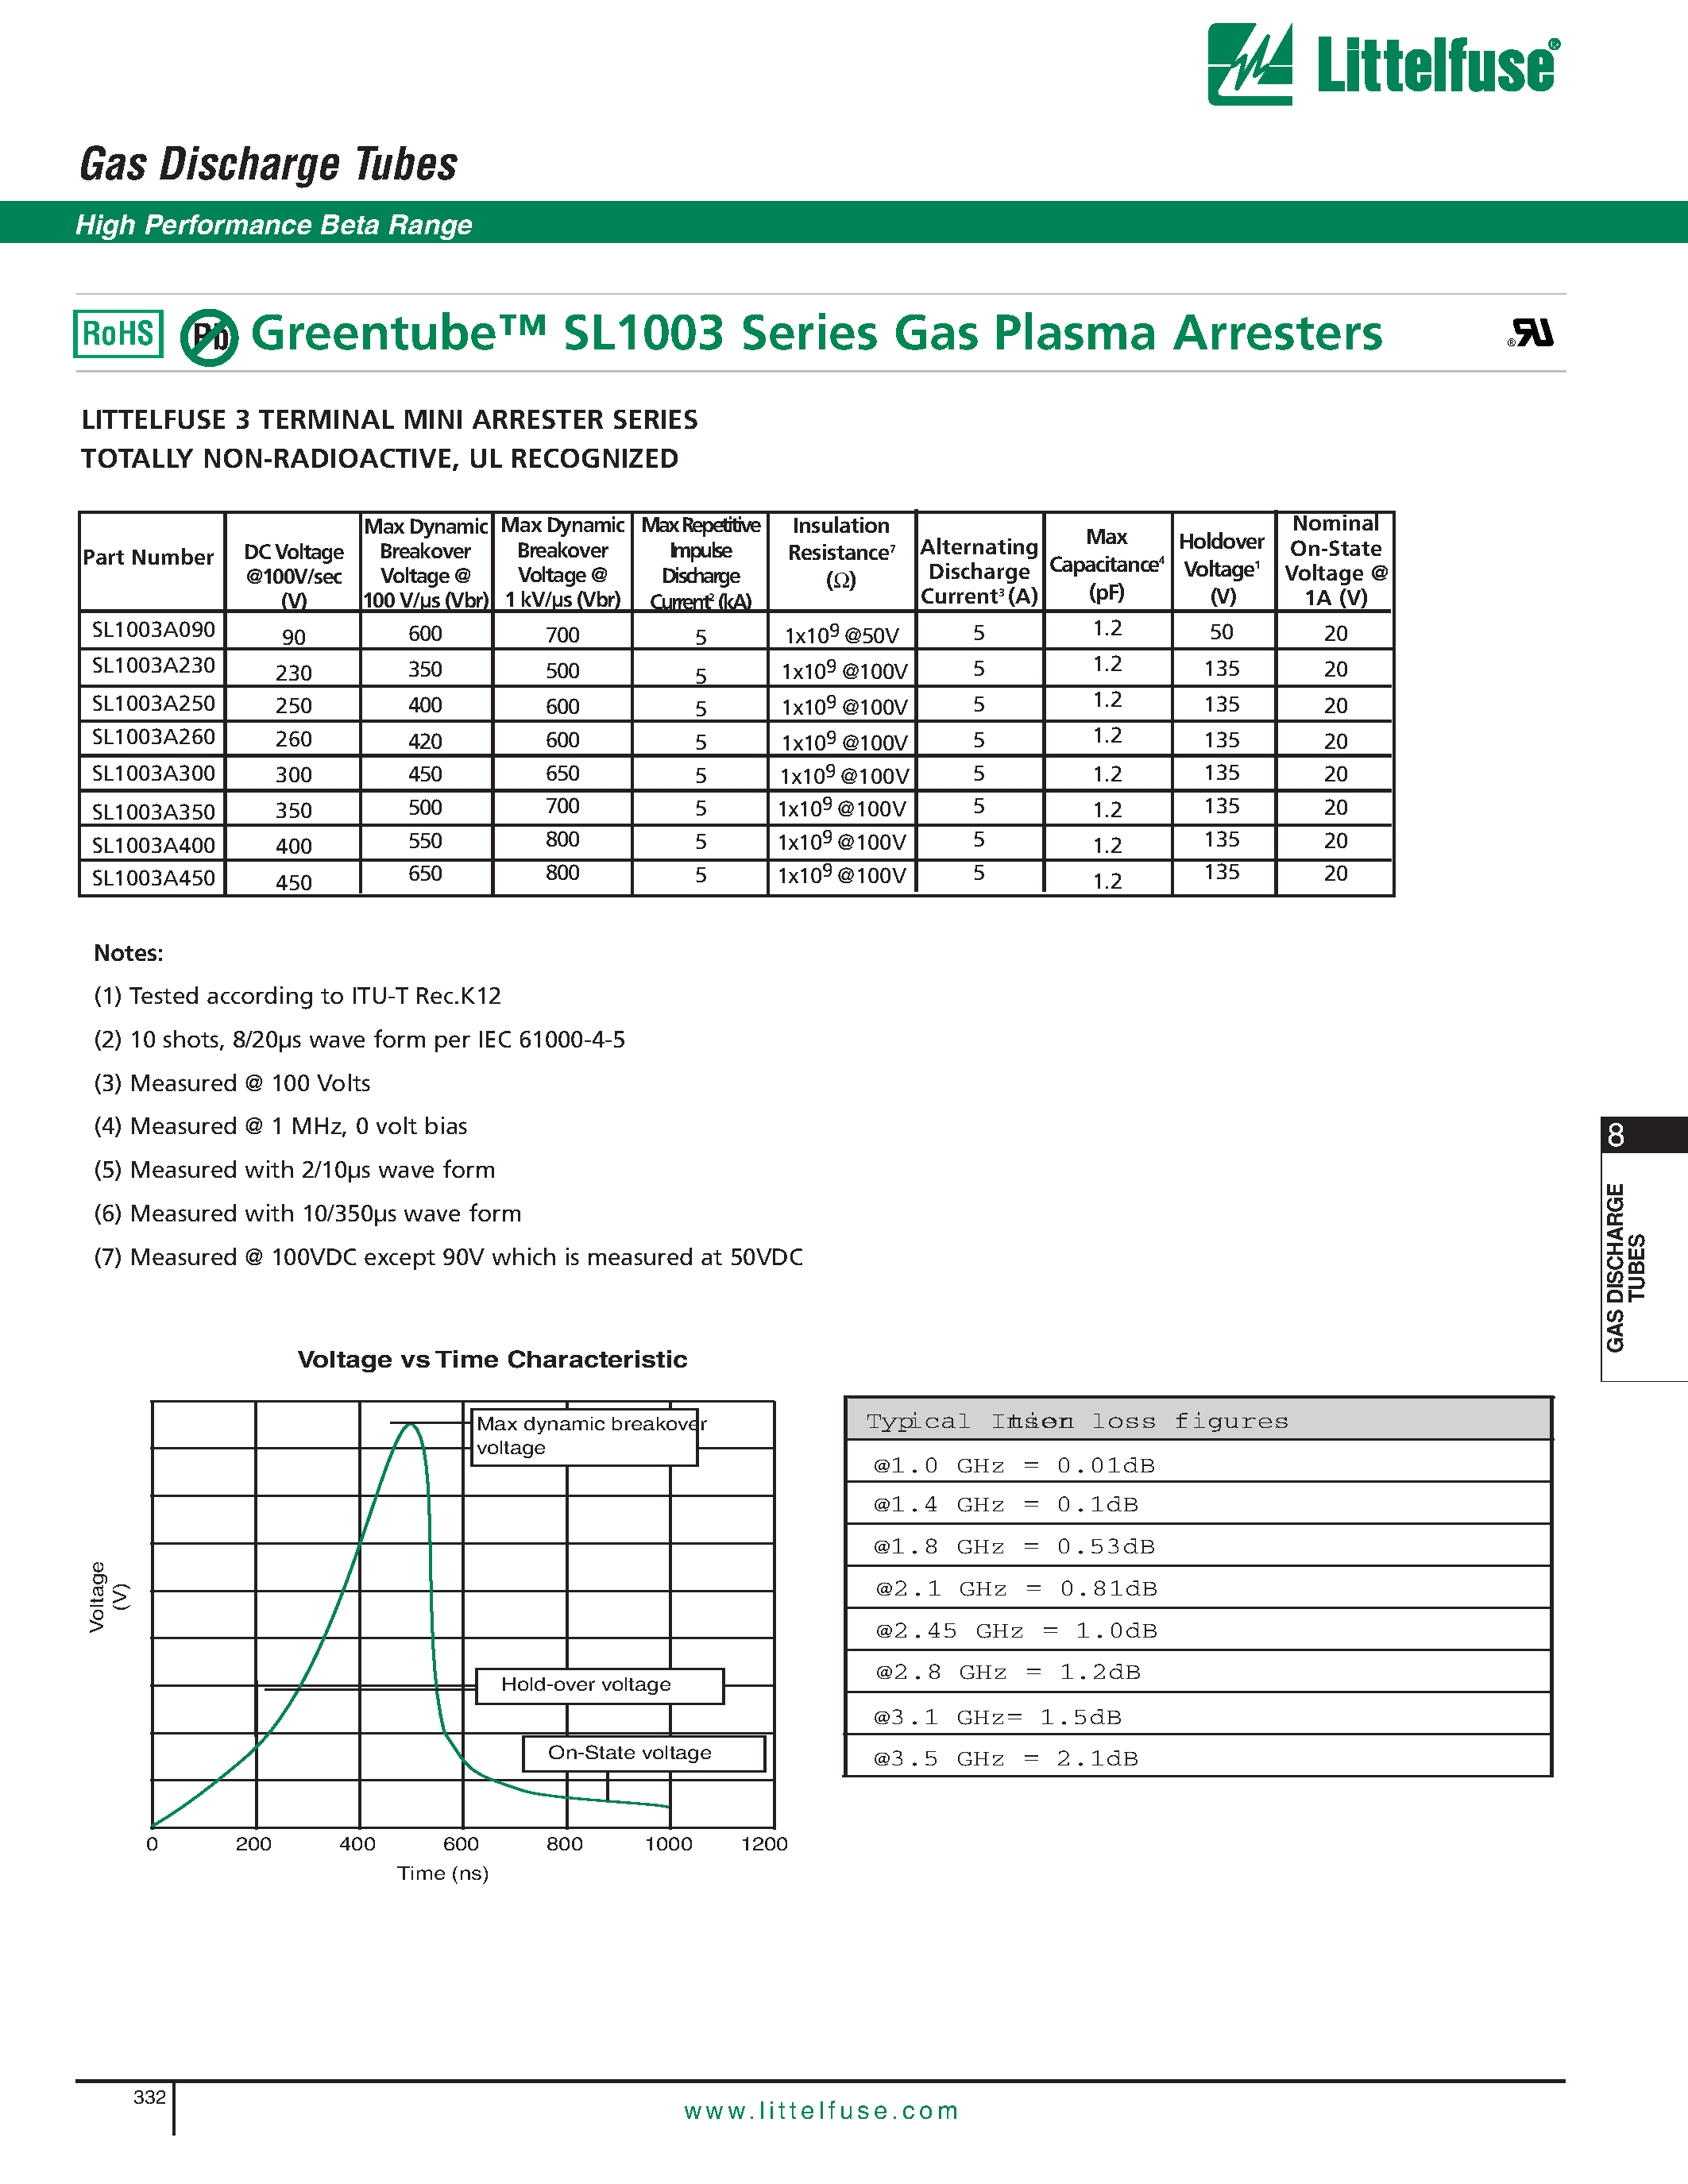 Datasheet SL1003A450 - Greentube SL1003 Series Gas Plasma Arresters page 2